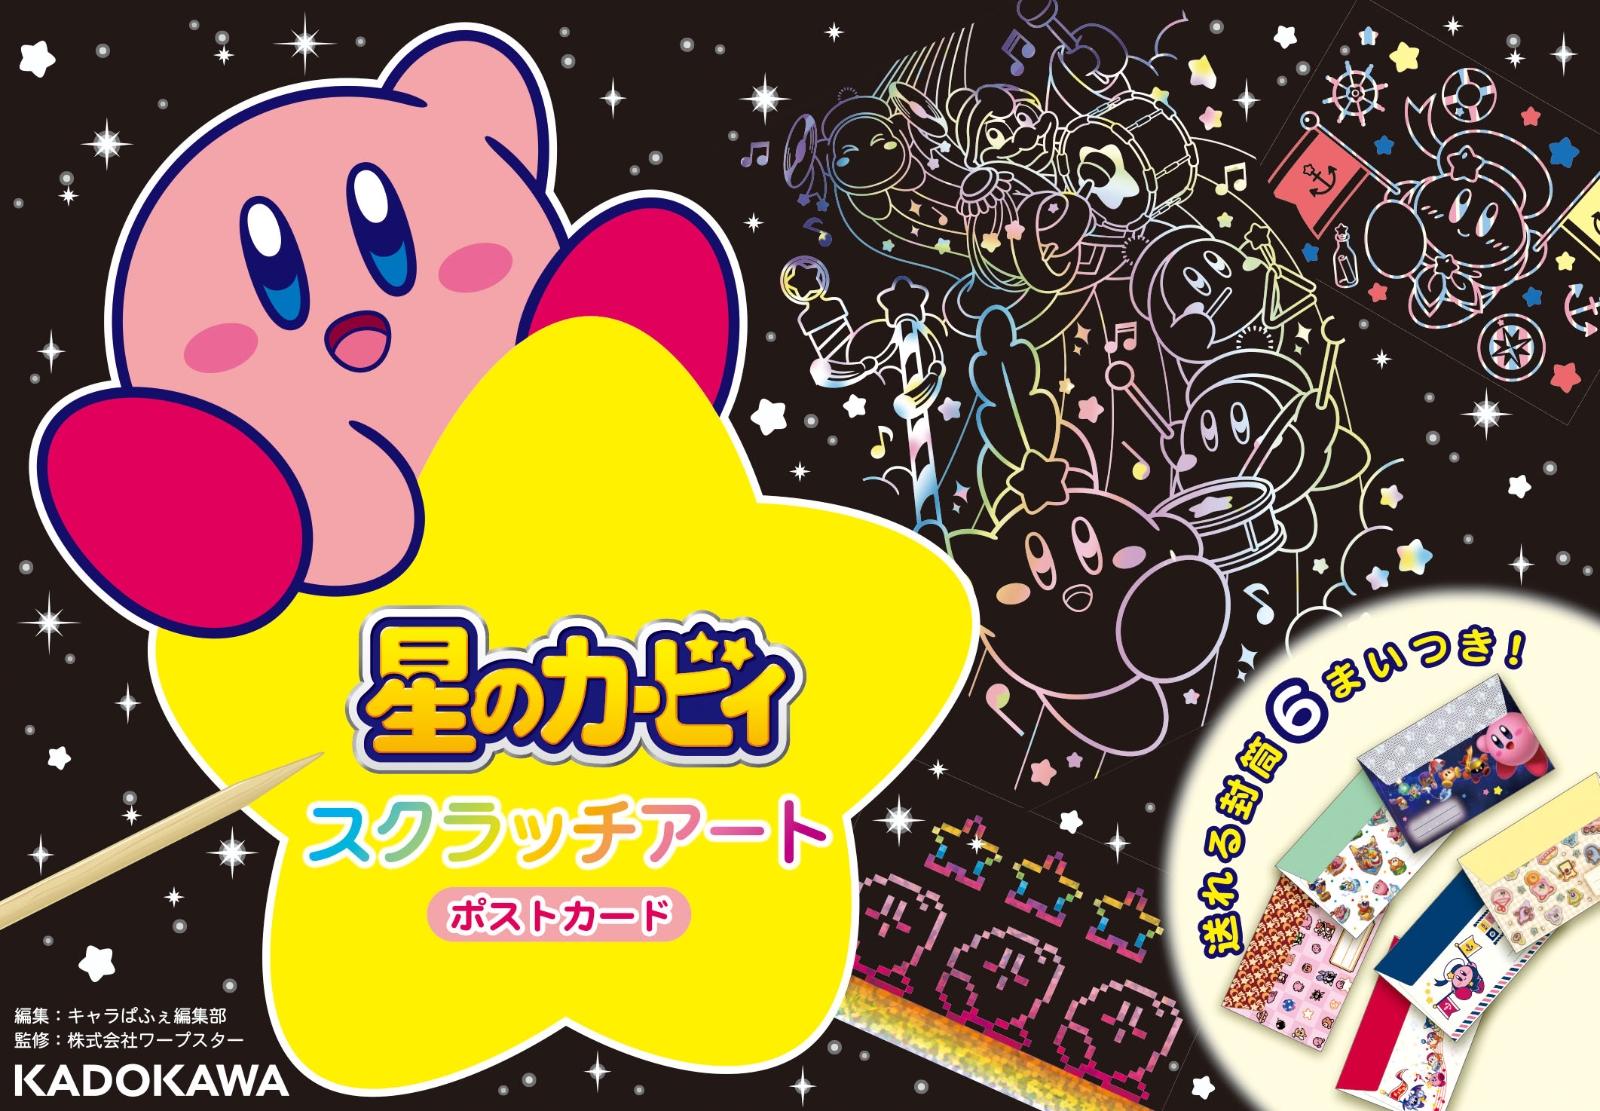 Kadokawaから 星のカービィ スクラッチアート ポストカード が19年3月日に発売決定 Nintendo Switch 情報ブログ